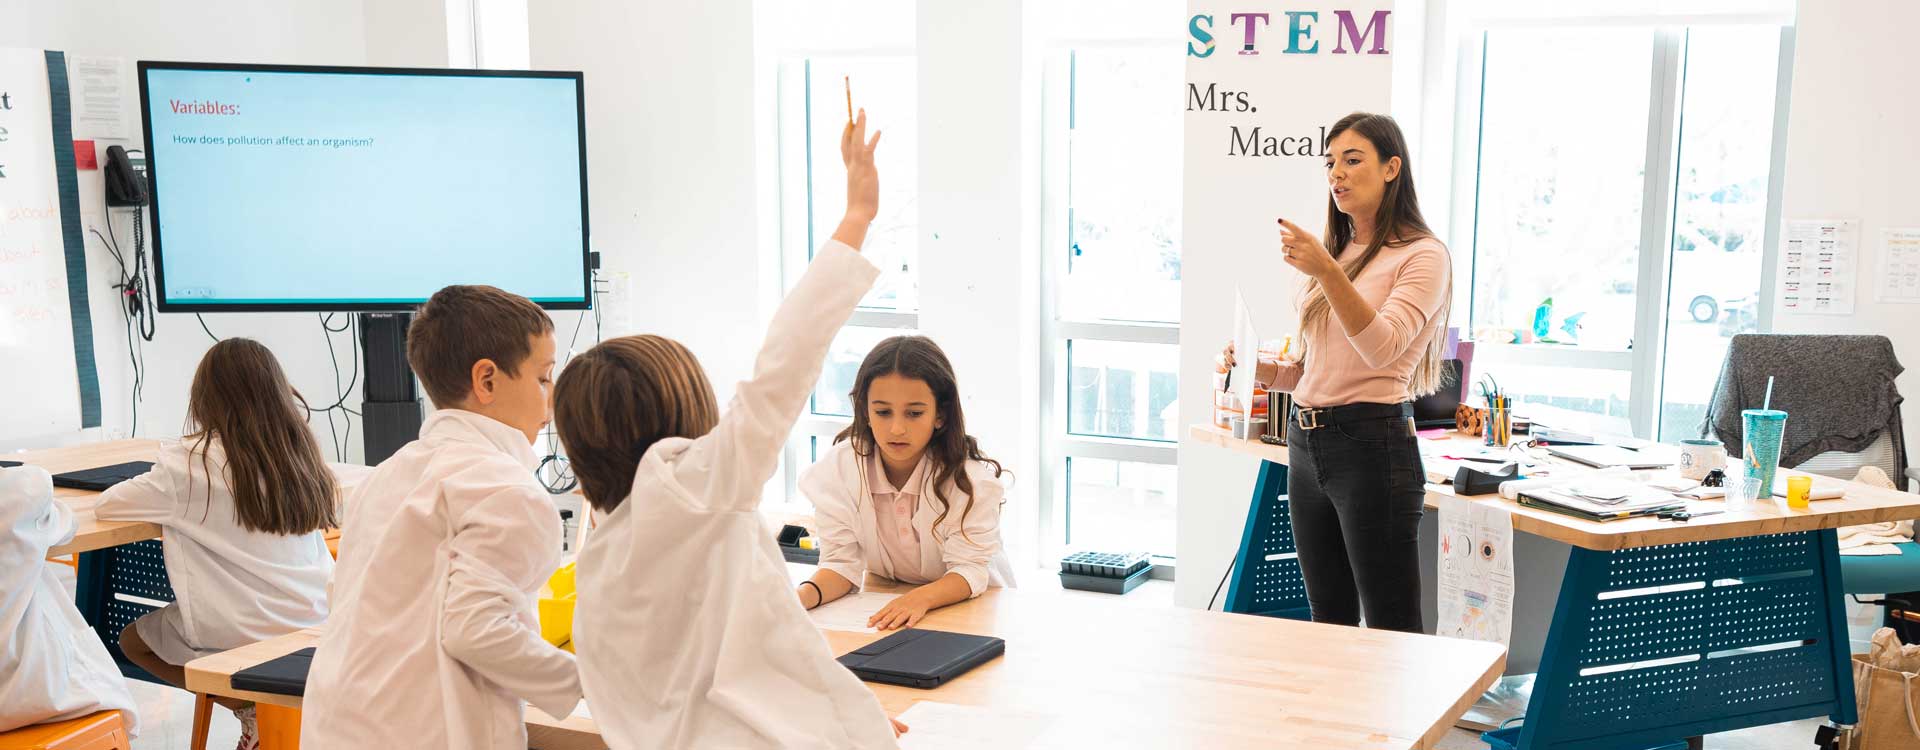 Child raising hand with teach in STEM class